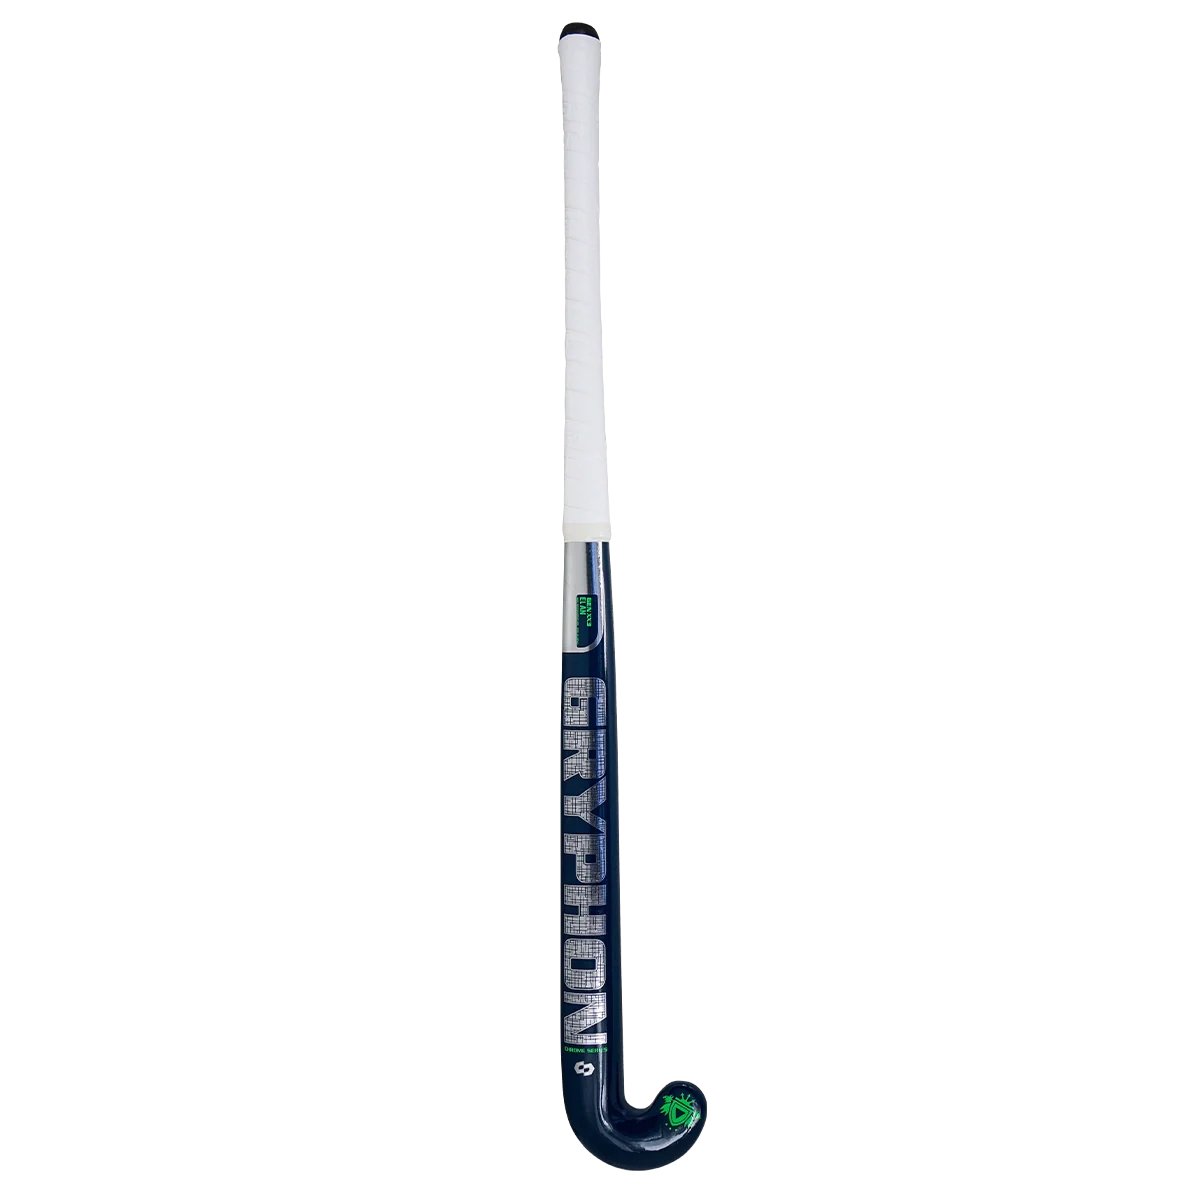 Gryphon Chrome Elan GXX3 Hockey Stick